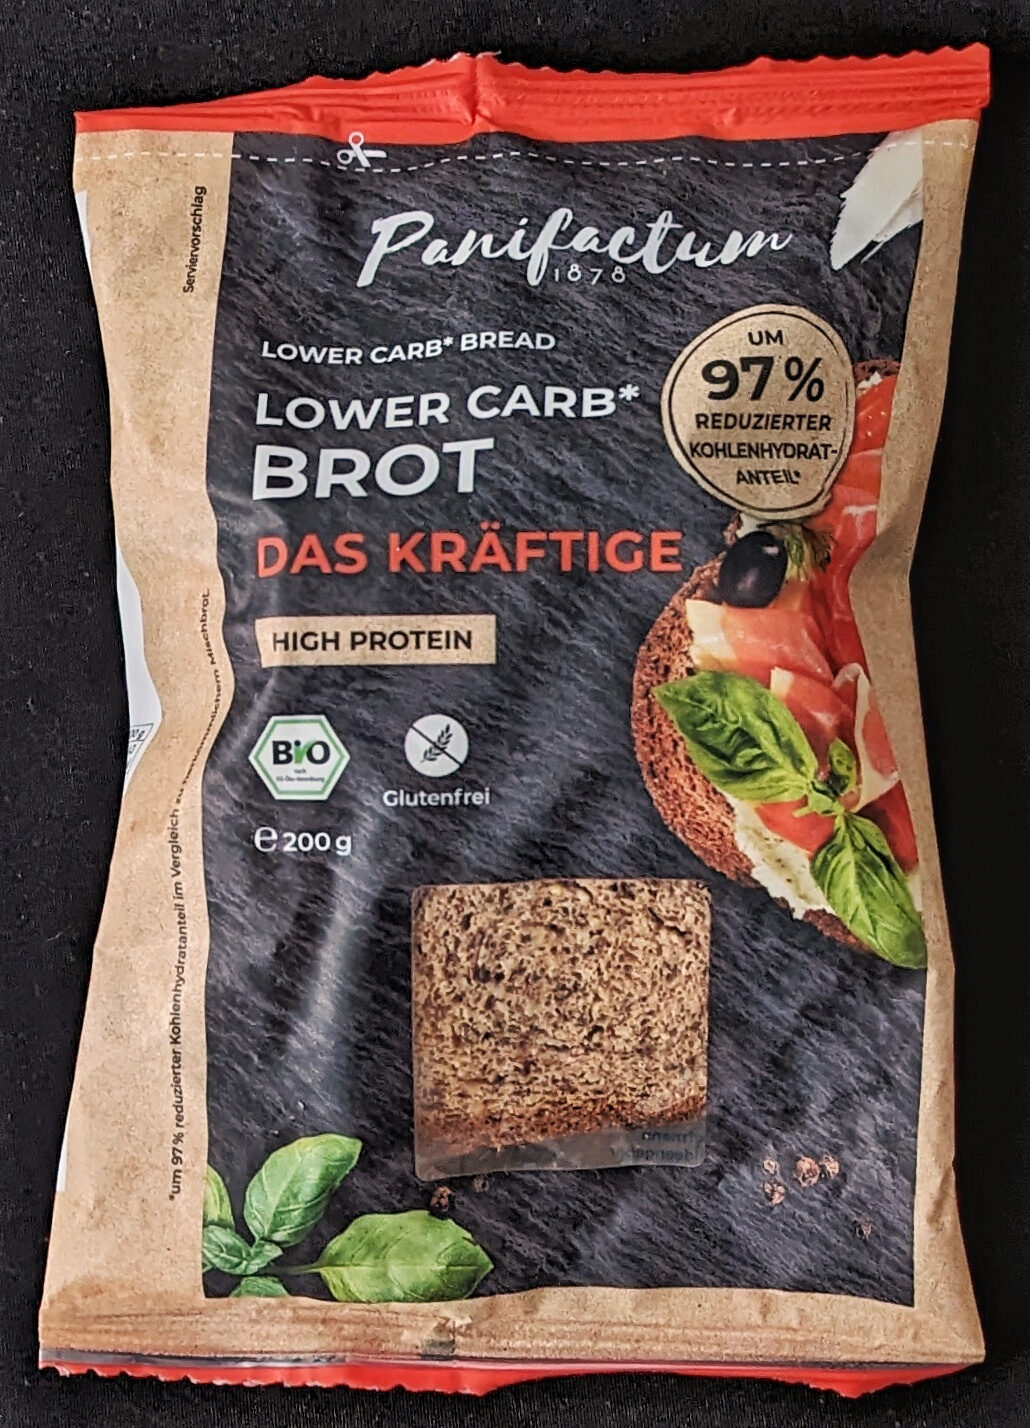 Lower Carb Brot, Das Kräftige - Produit - de